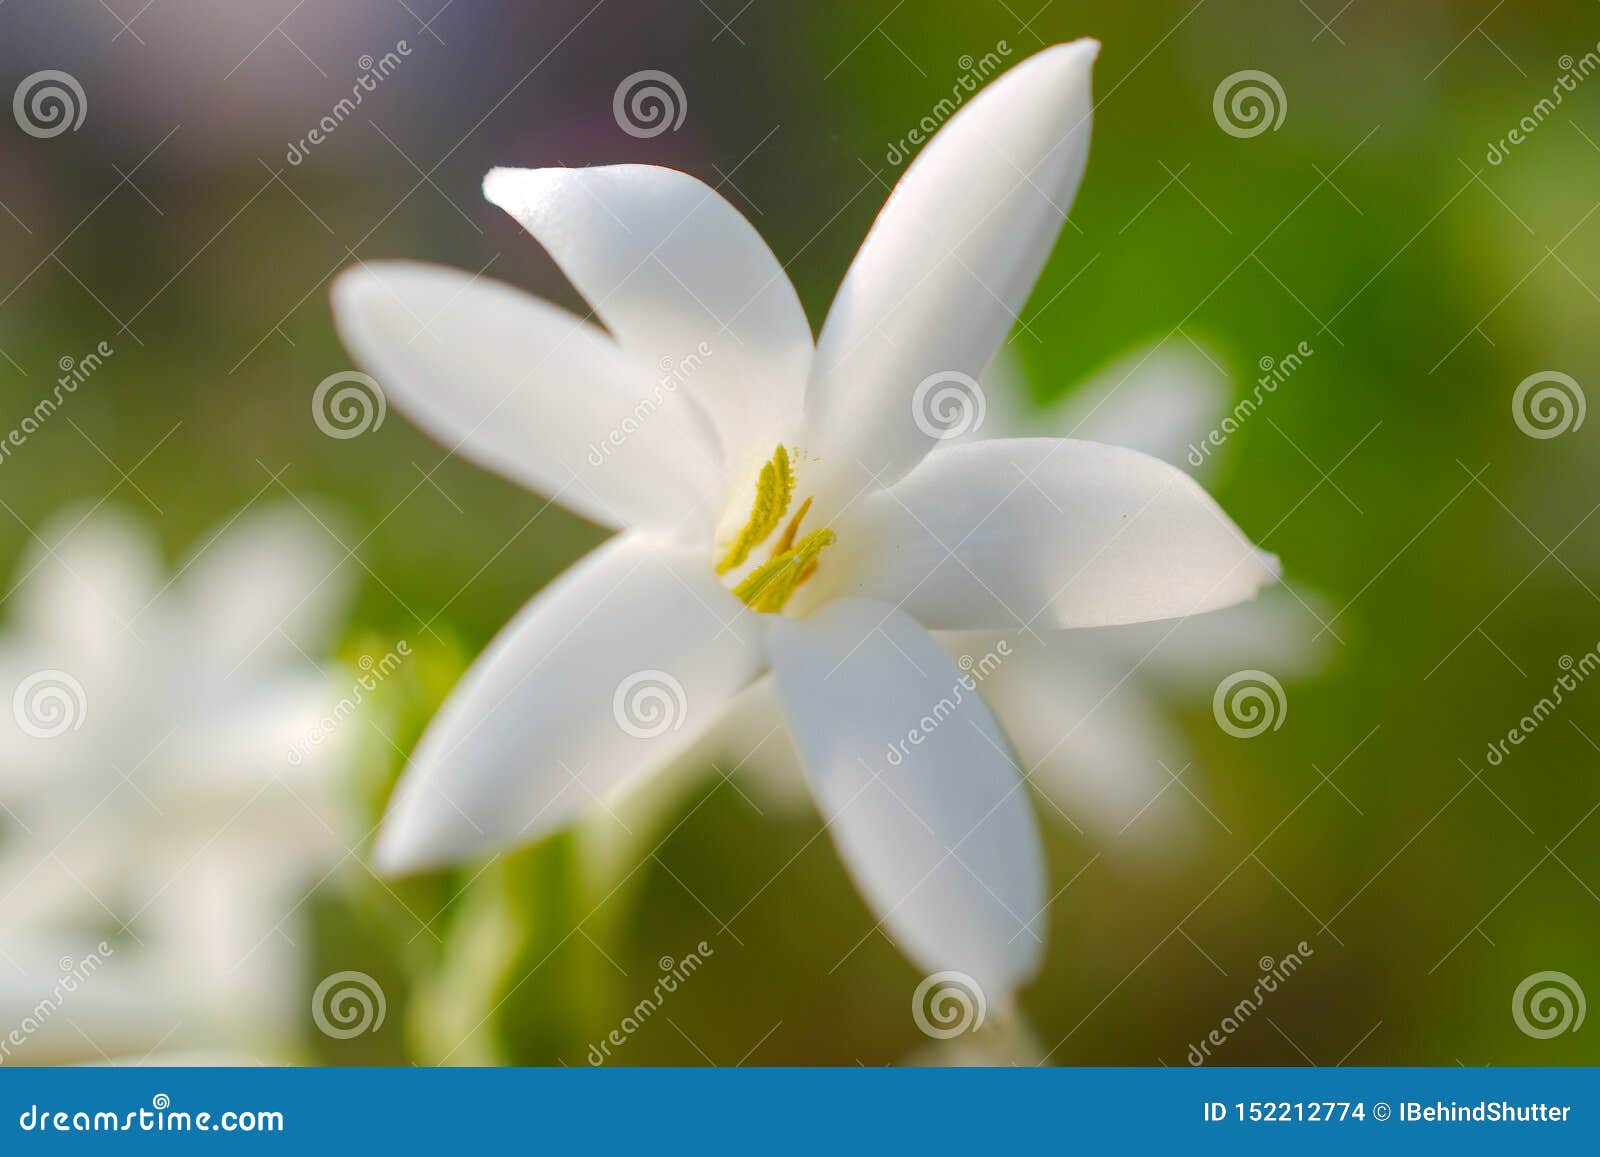 A Beautiful White Tuberose Captured in Macro Stock Photo - Image of ...